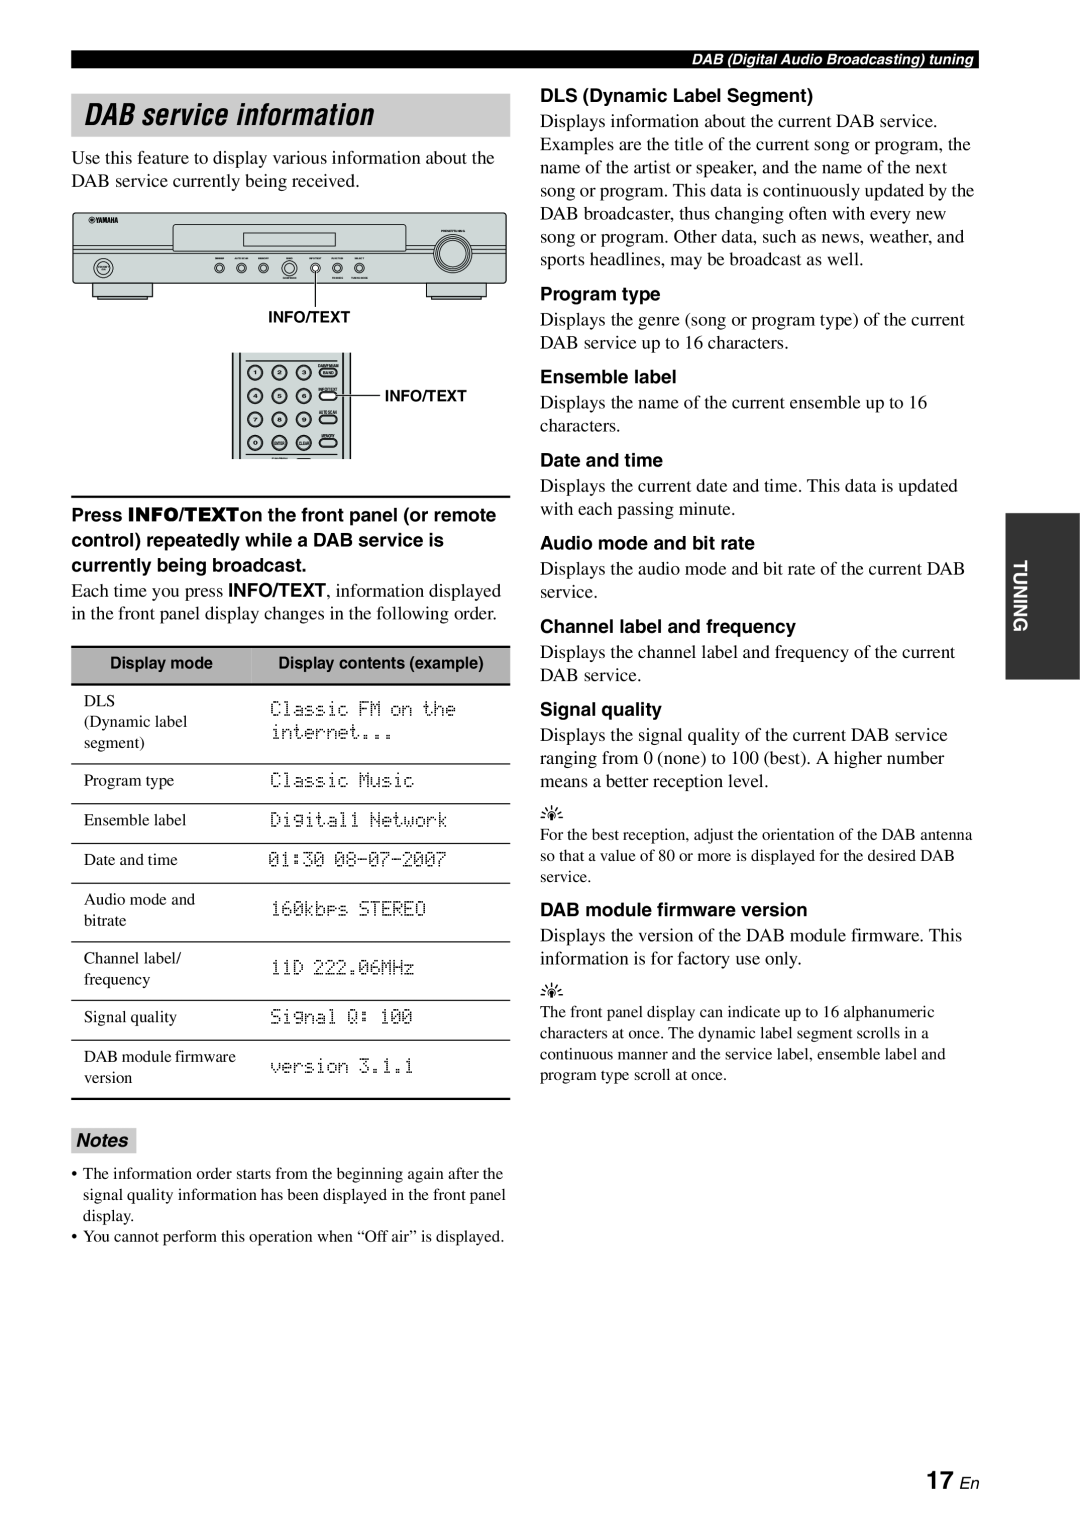 Yamaha TX-761DAB owner manual DAB service information, 17 En, Tuning 